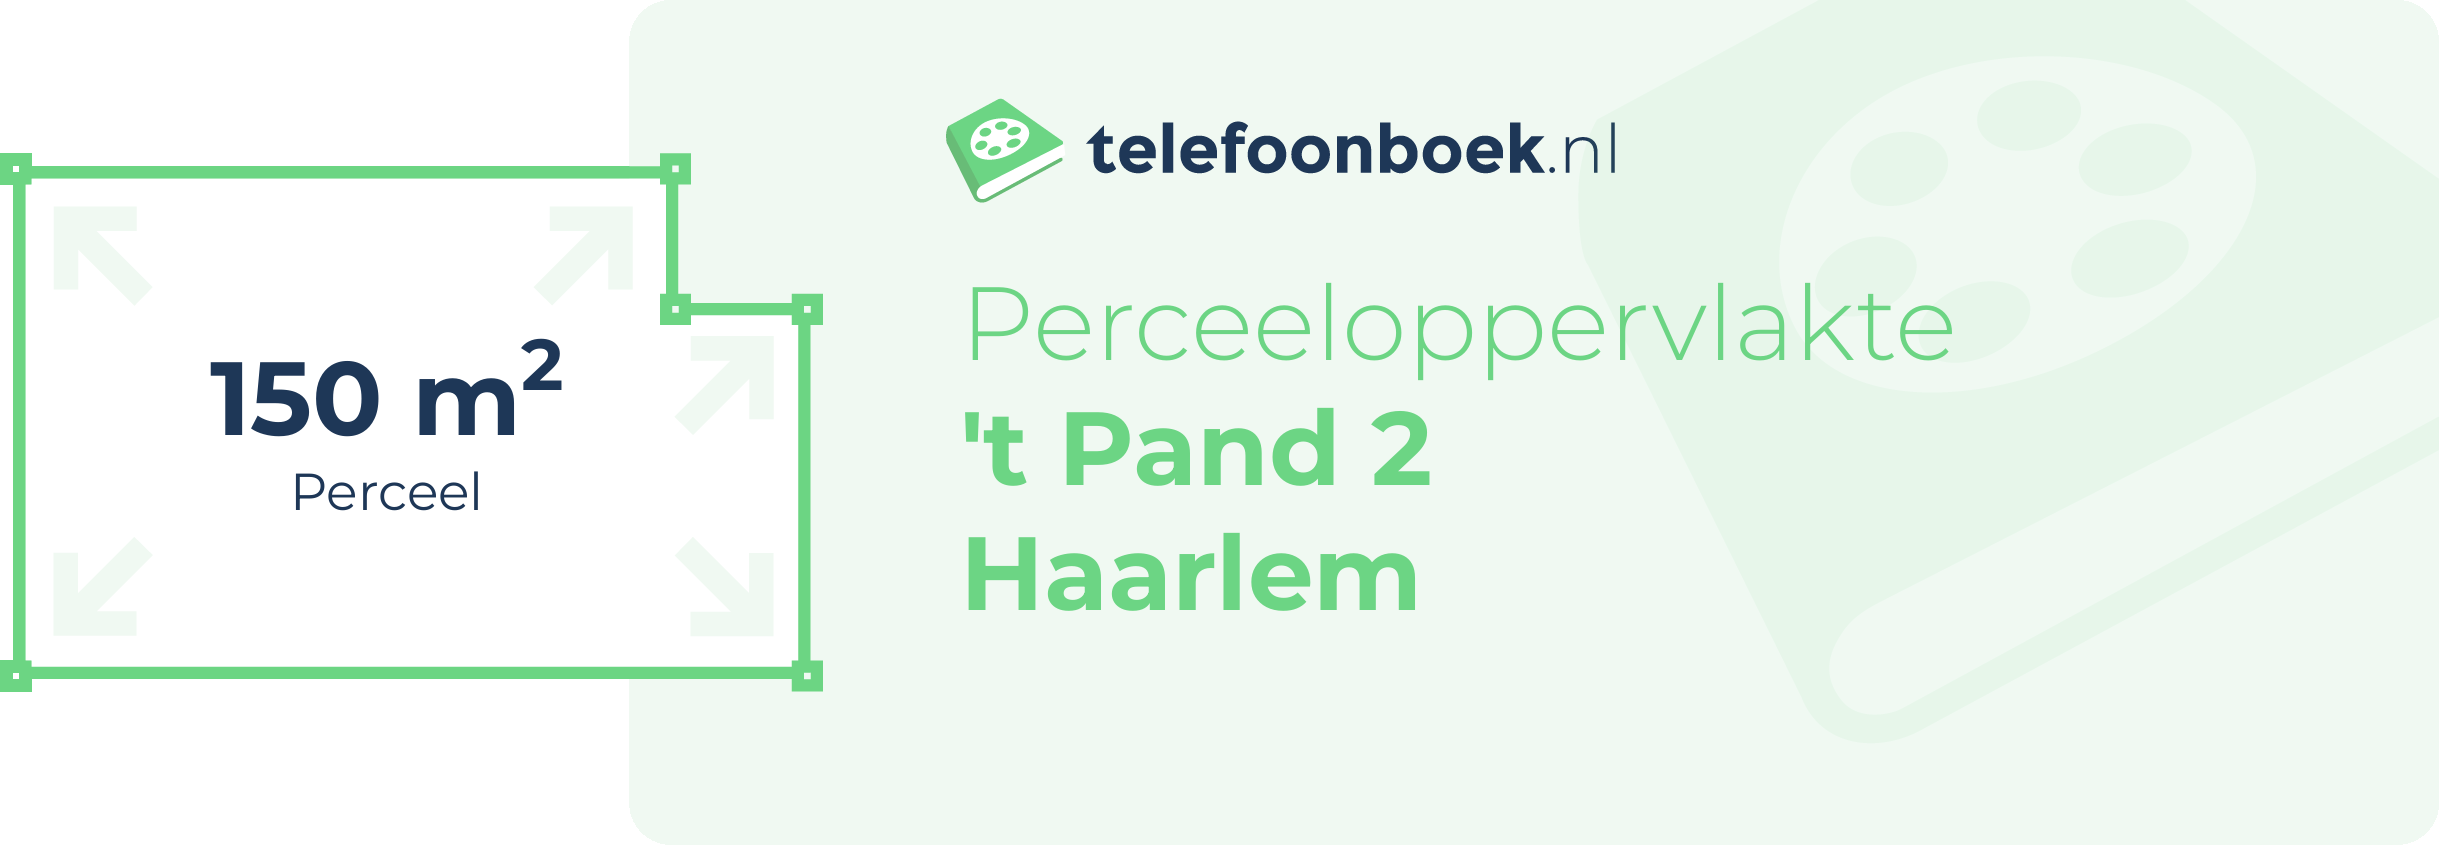 Perceeloppervlakte 't Pand 2 Haarlem